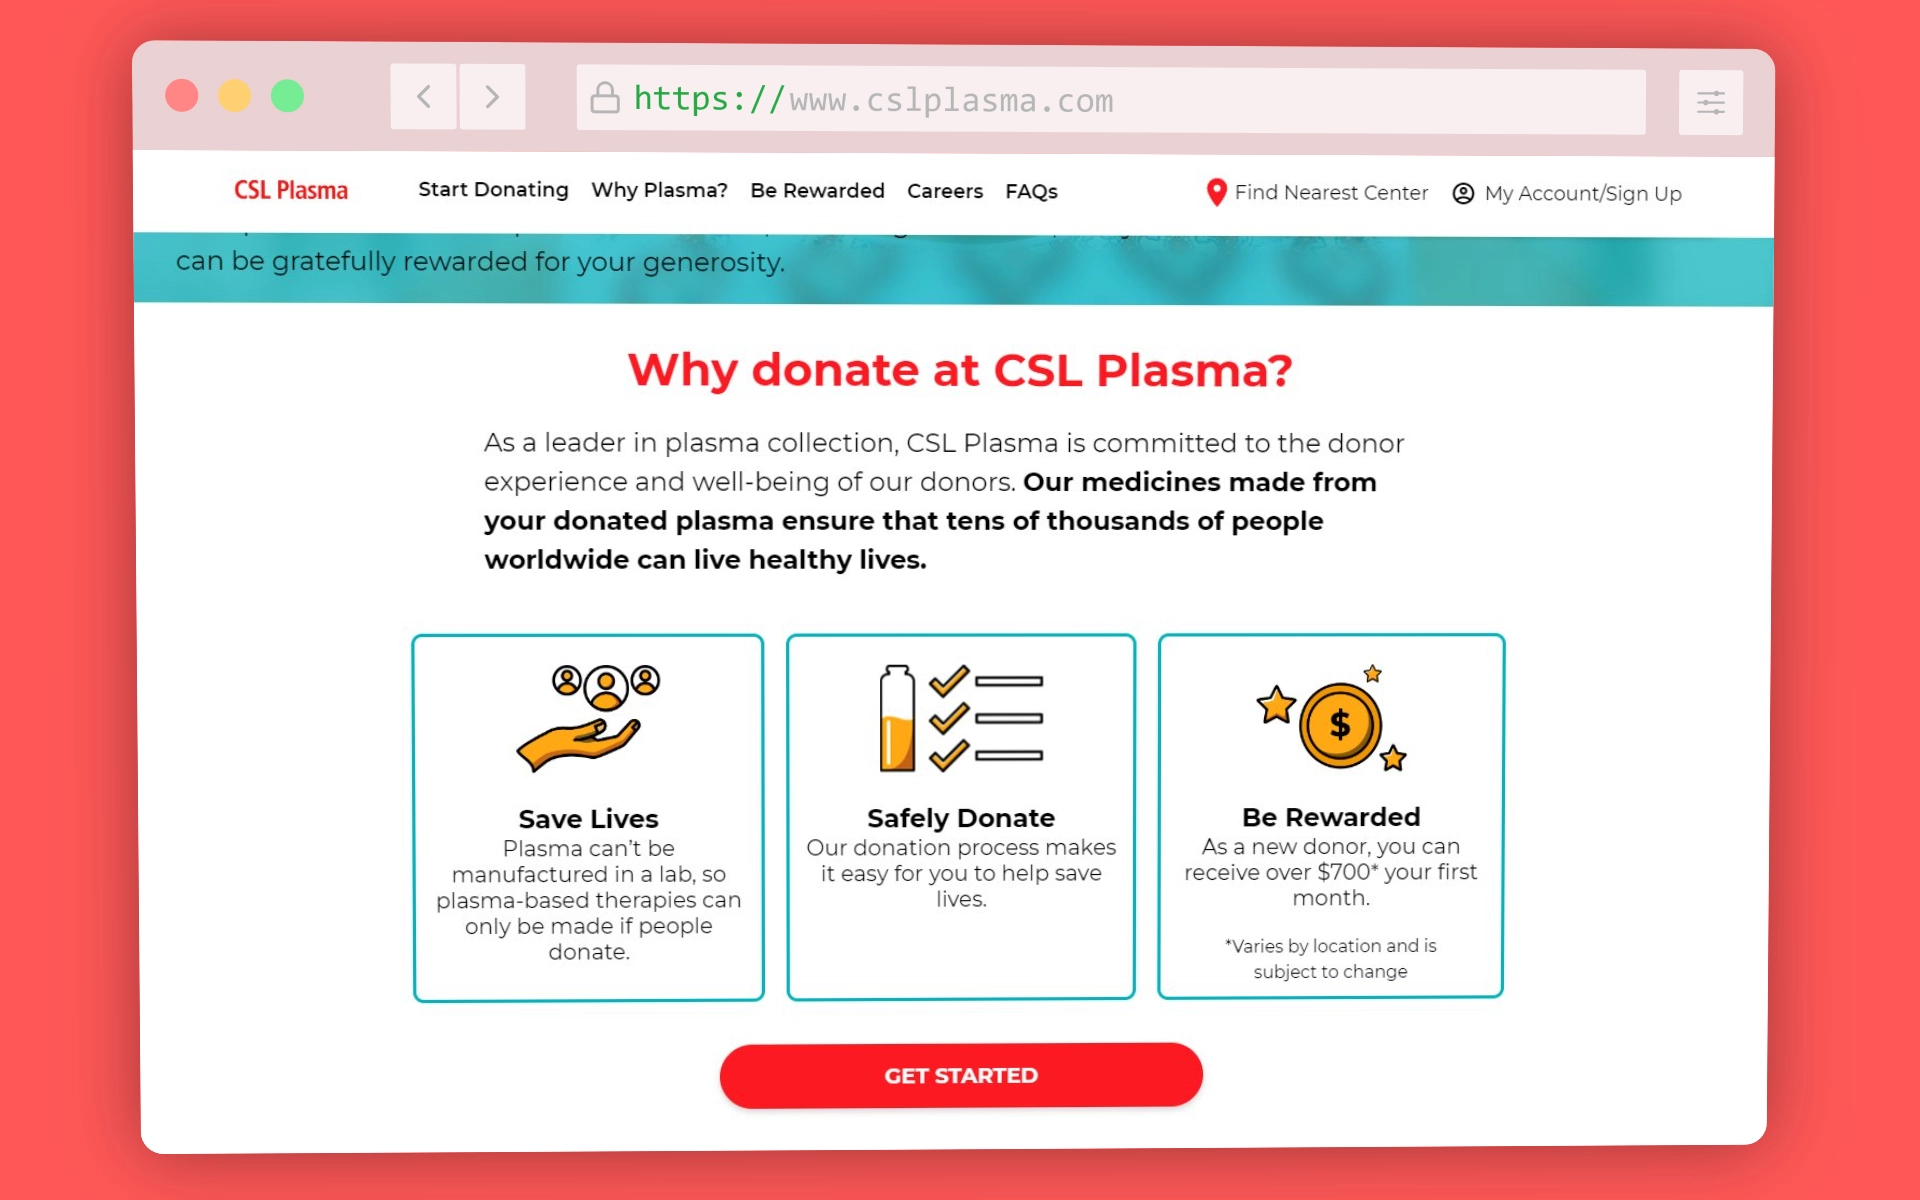 Sitio web de la empresa de CSL Plasma.